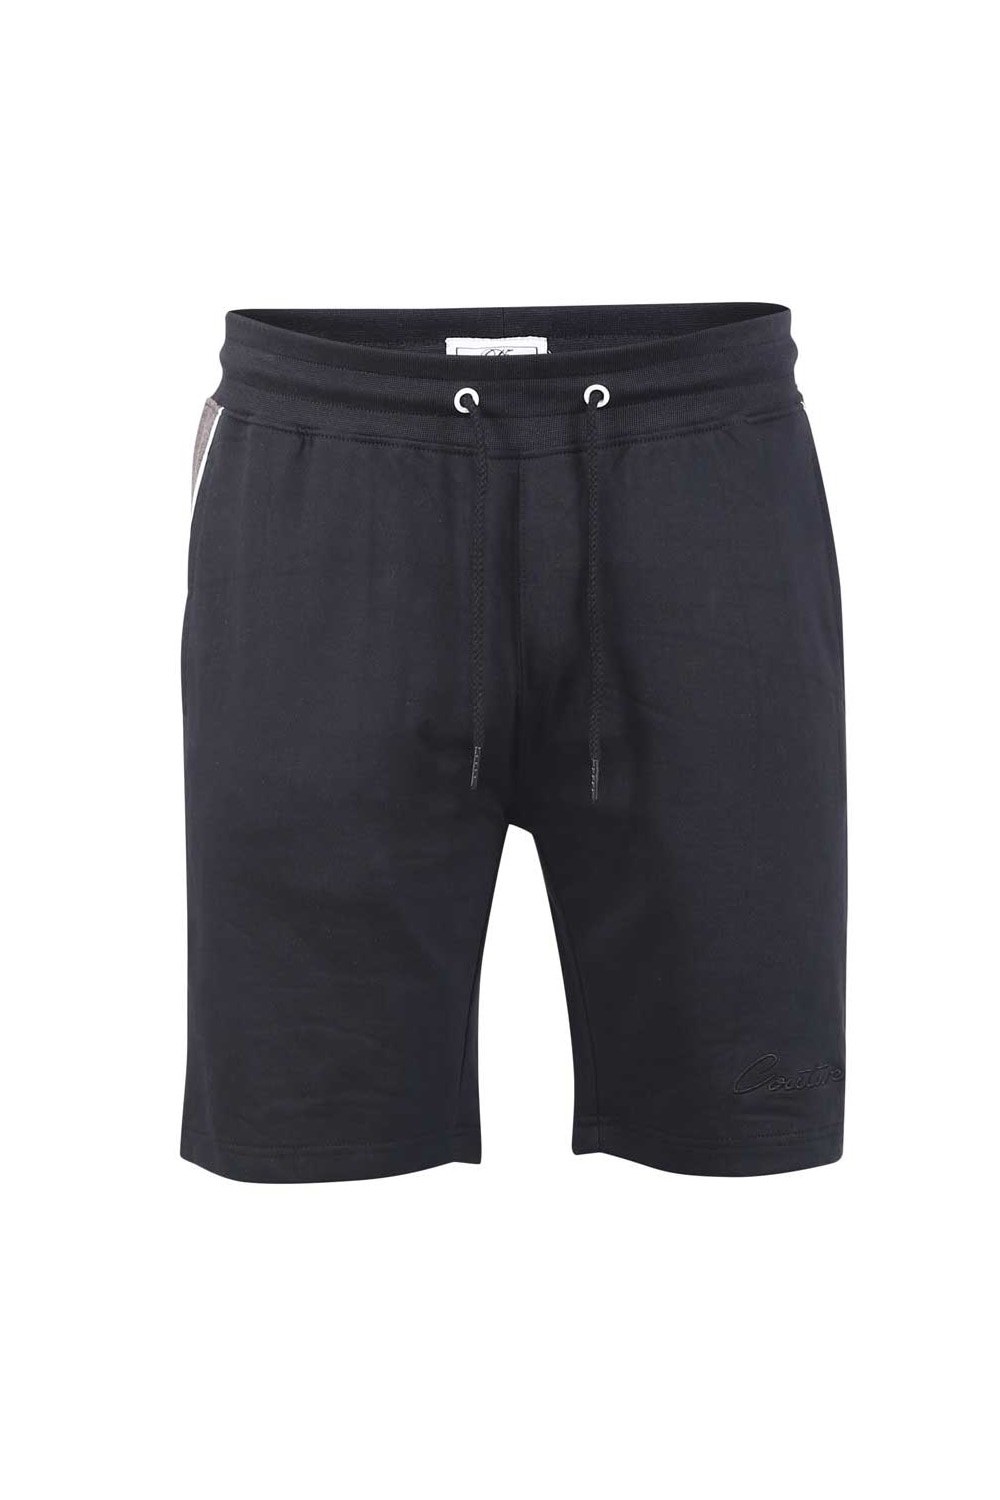 Andover D555 Mens Side Panels Kingsize Shorts -